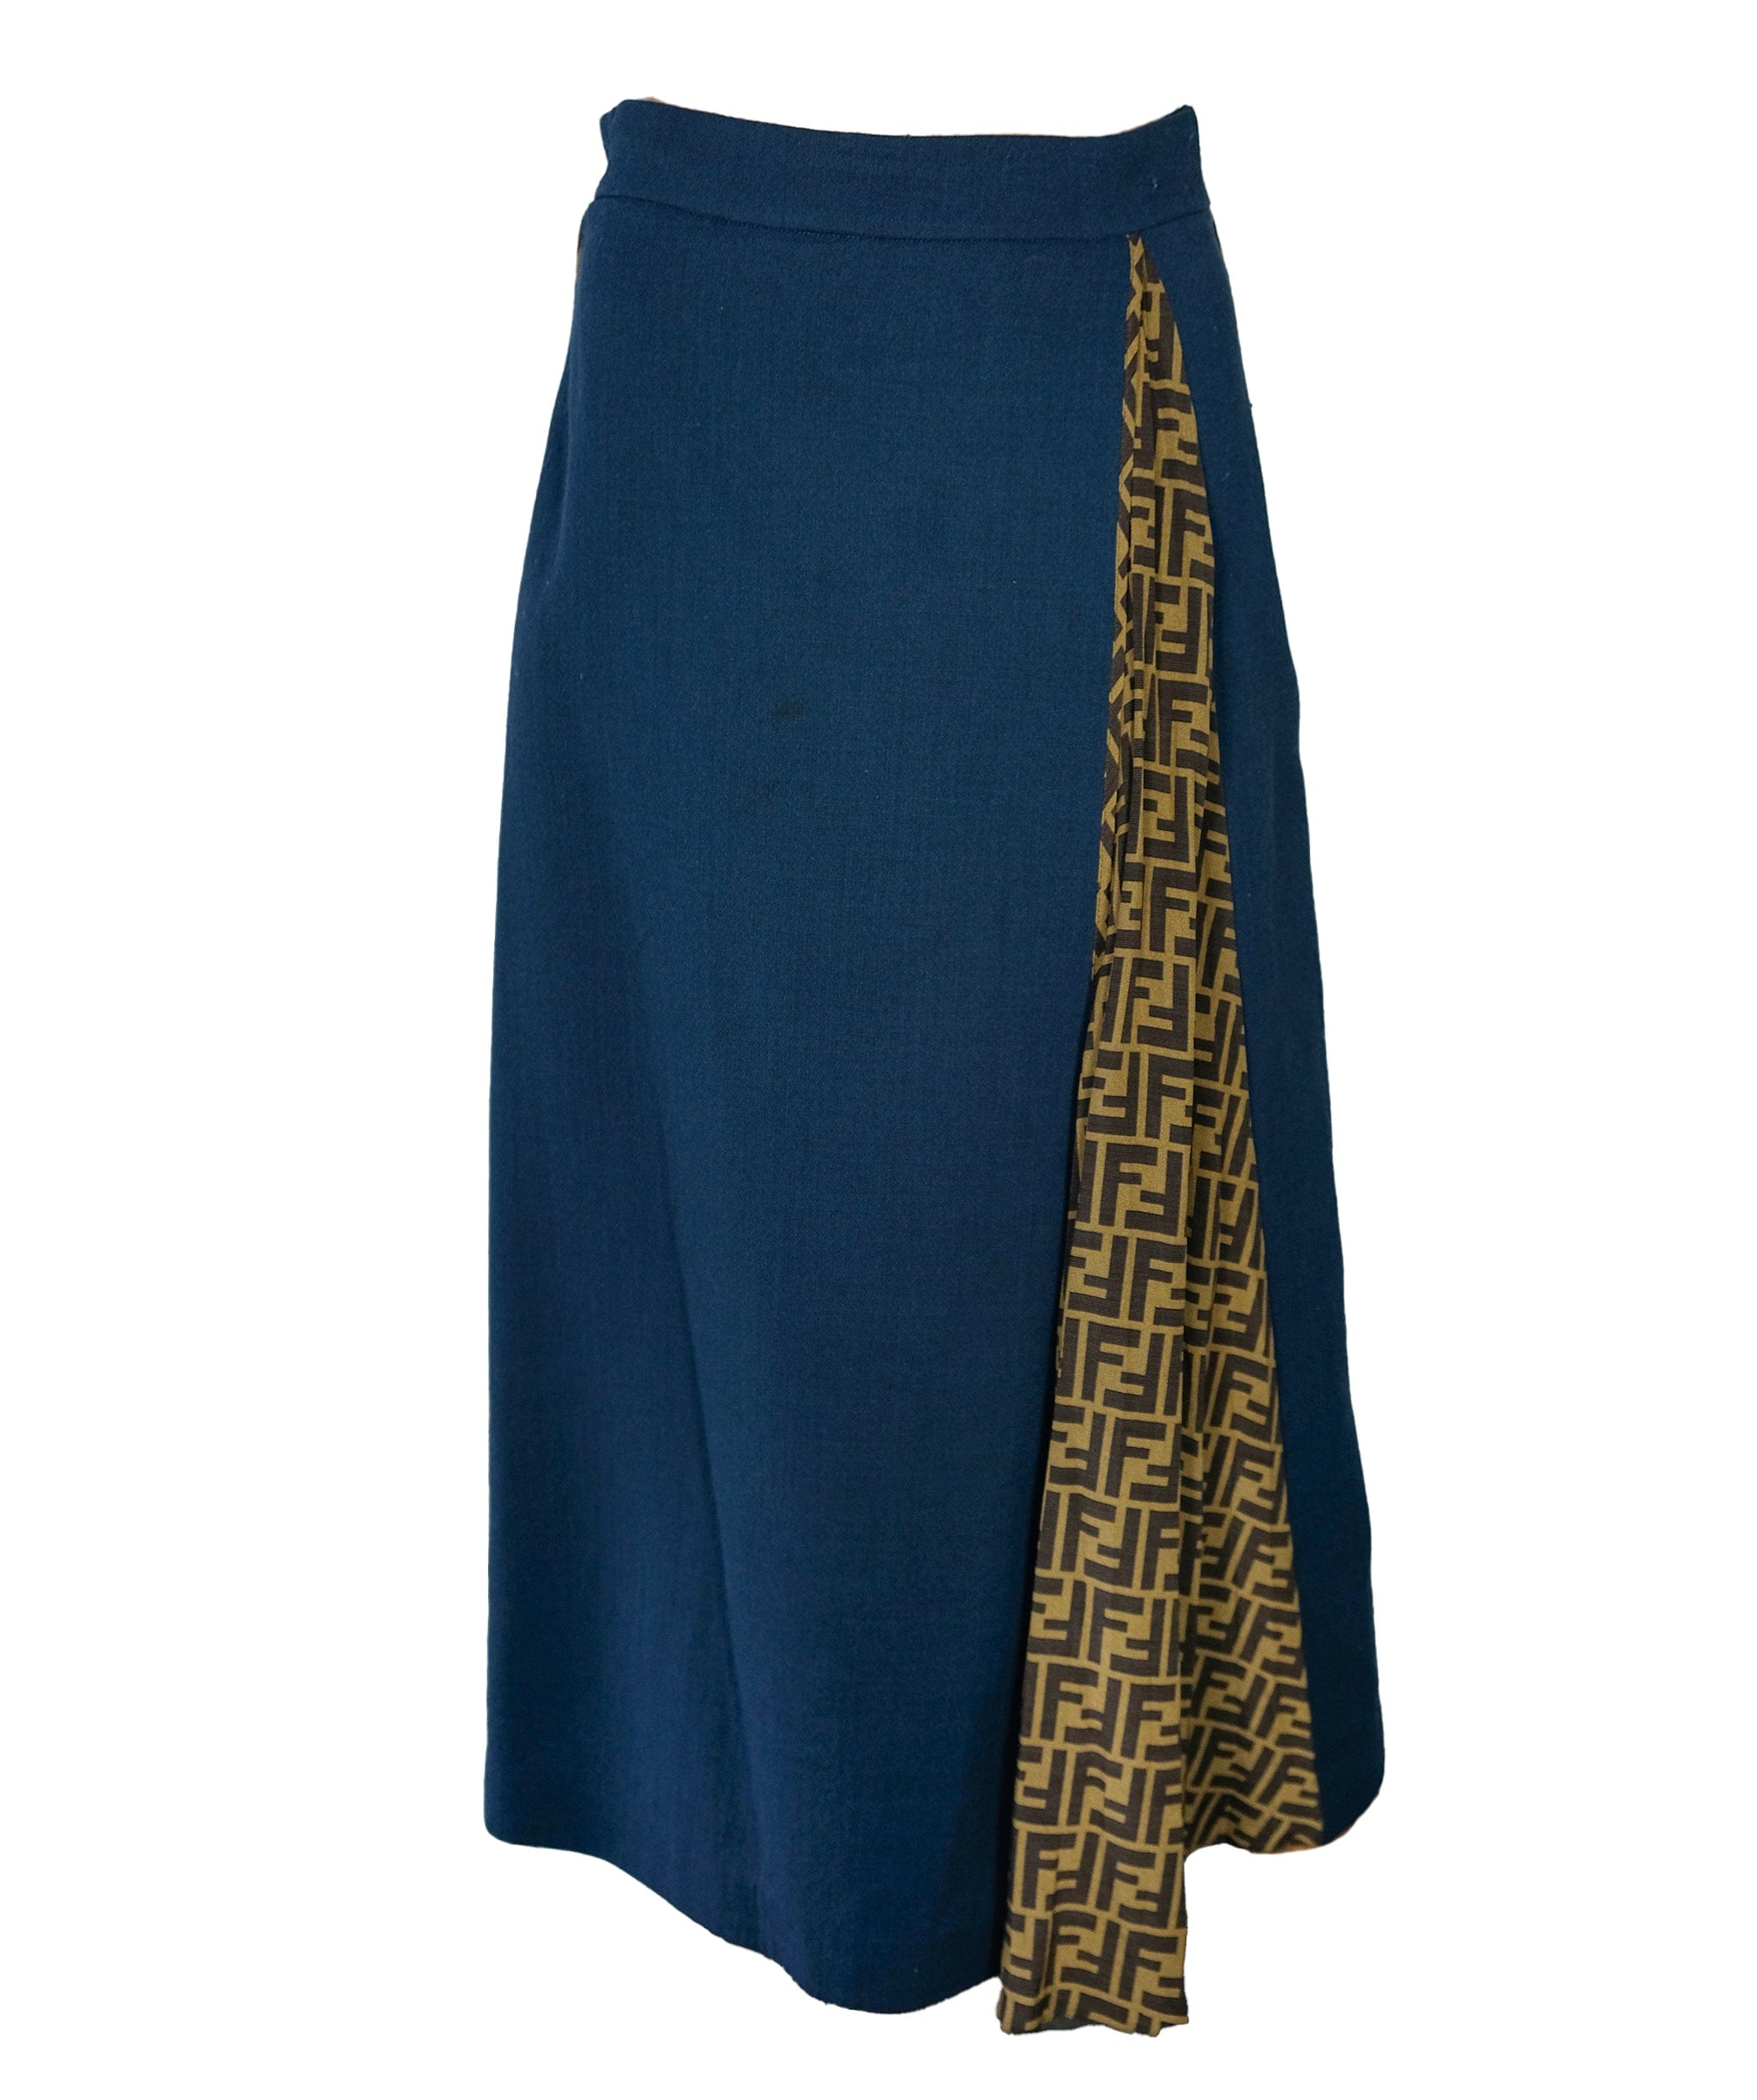 Fendi Fendi Long Skirt blue with zucca print RJC3166